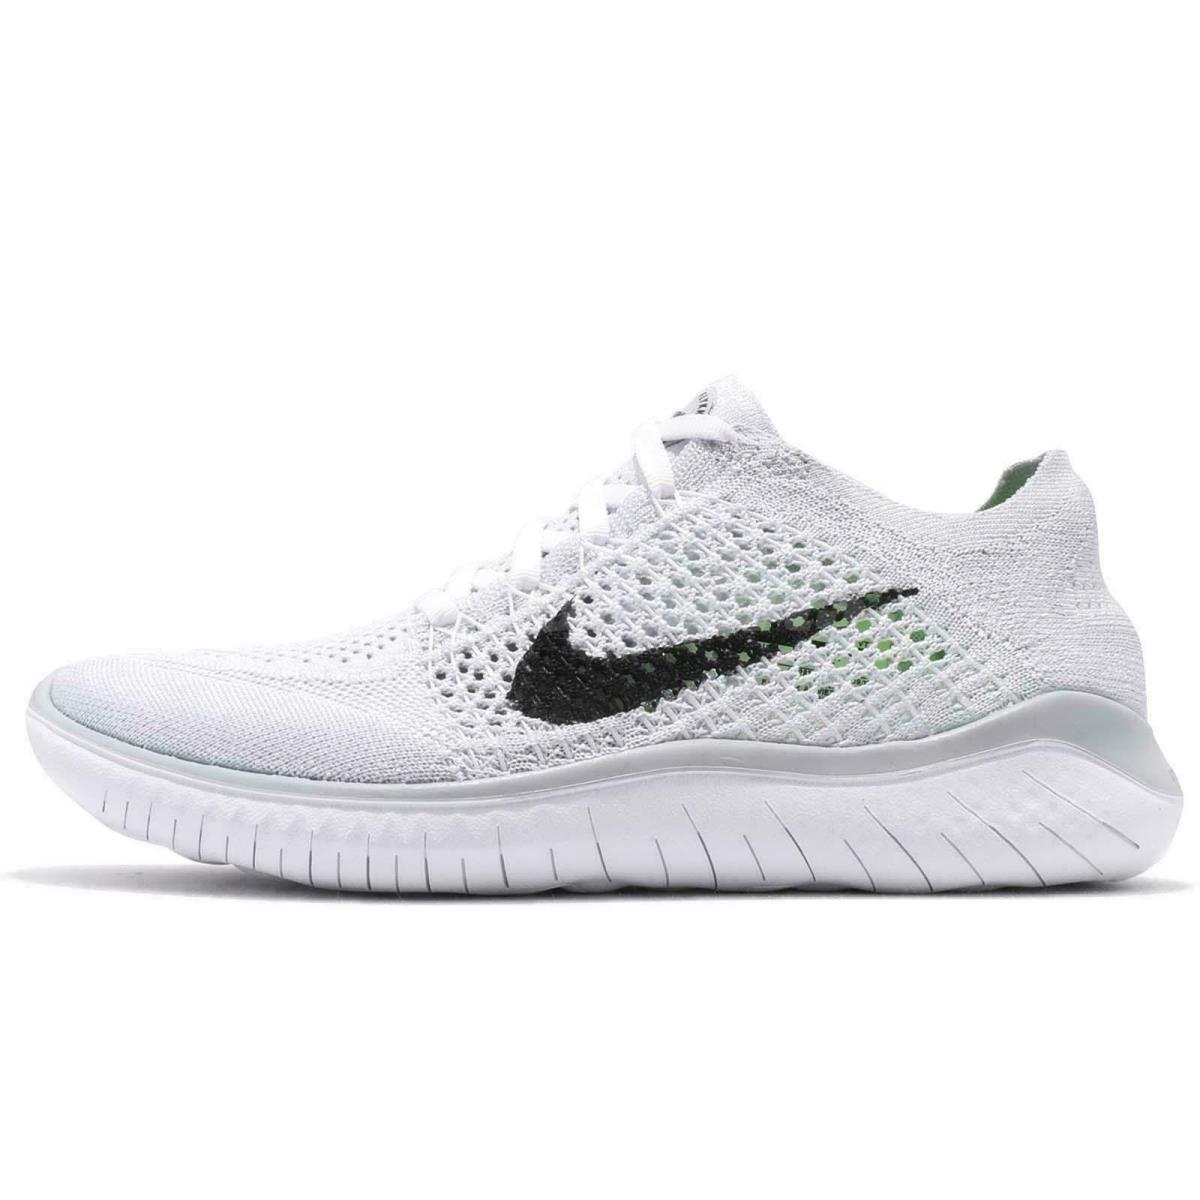 Womens Nike Free RN Flyknit 2018 Running Shoes 942839-100 -sz 9 -new